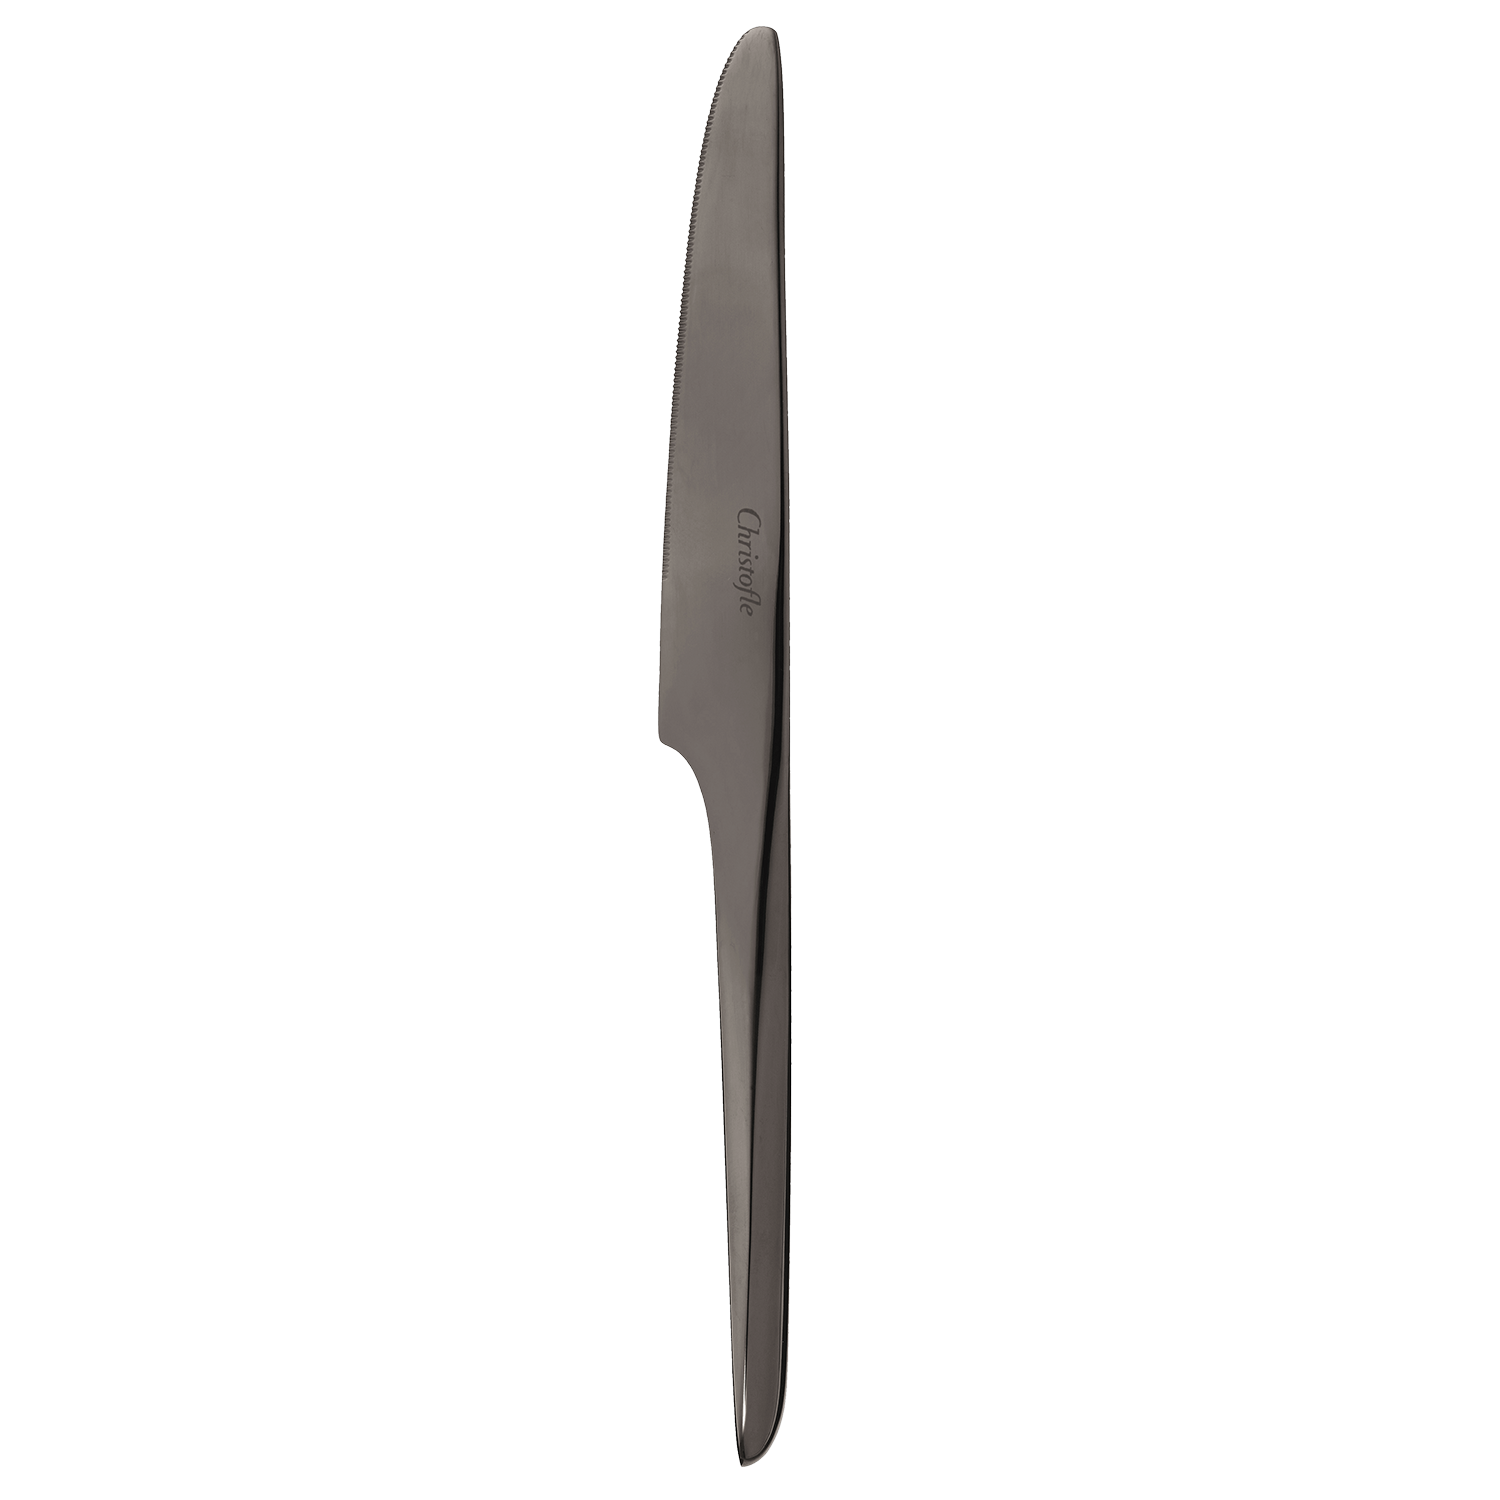 Black stainless steel table knife